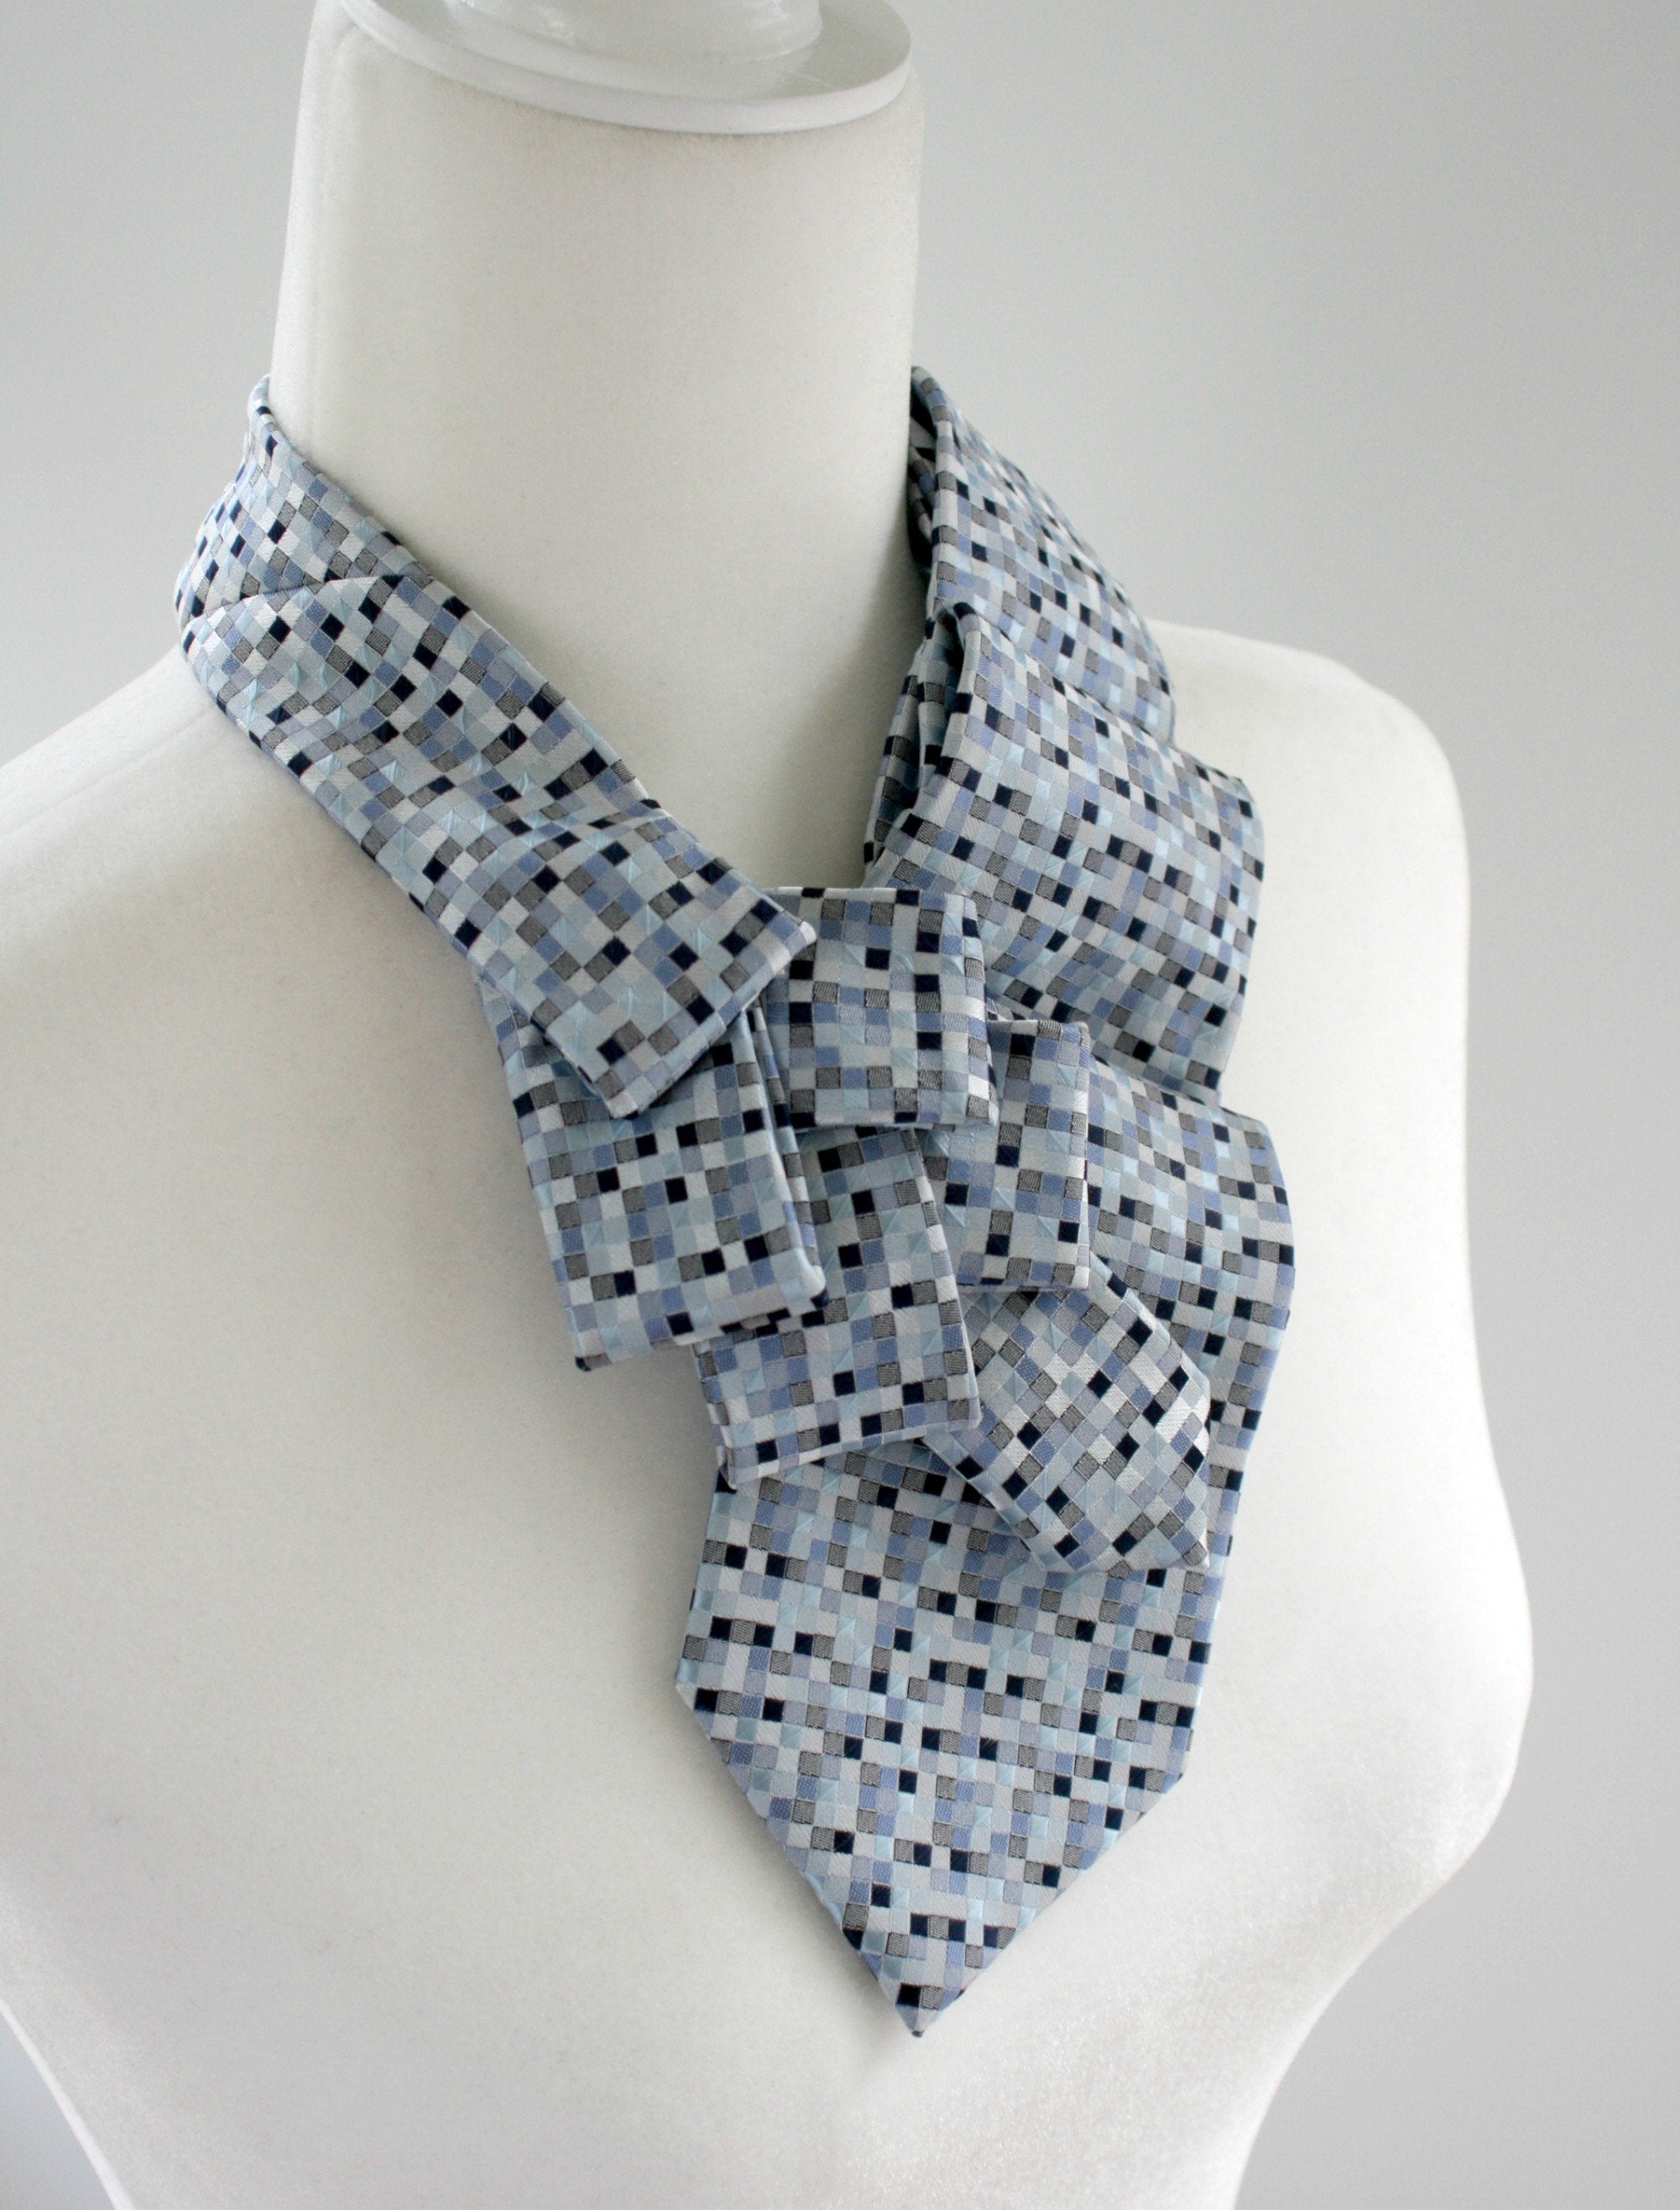 Women's Tie - Neck Tie Women - Necktie Scarf - Eco Scarf - Working Mom Gift. 69